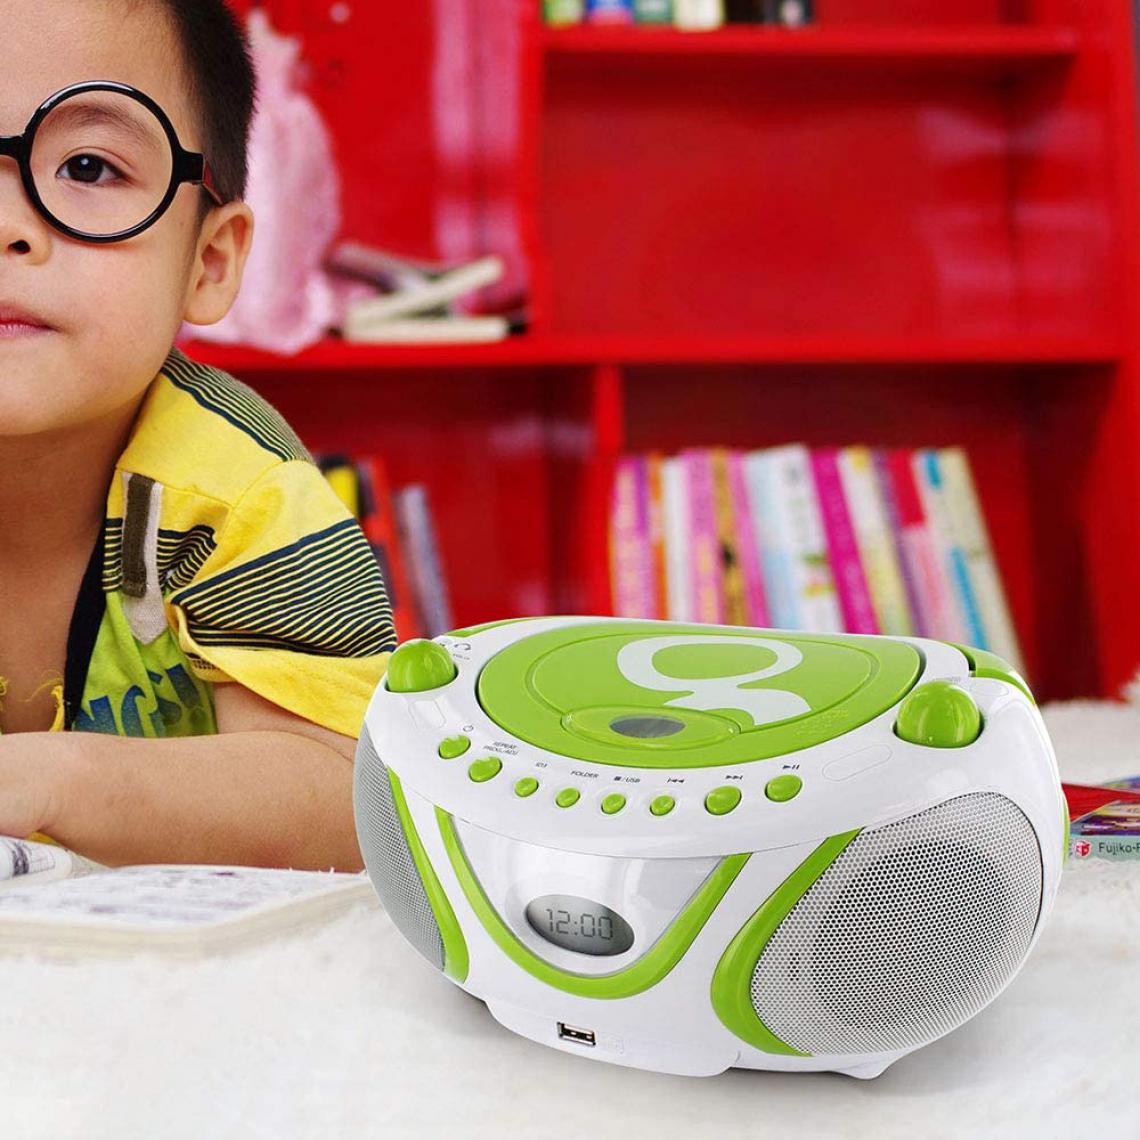 Metronic - mini chaine hifi Radio Lecteur CD MP3 USB vert blanc - Radio, lecteur CD/MP3 enfant